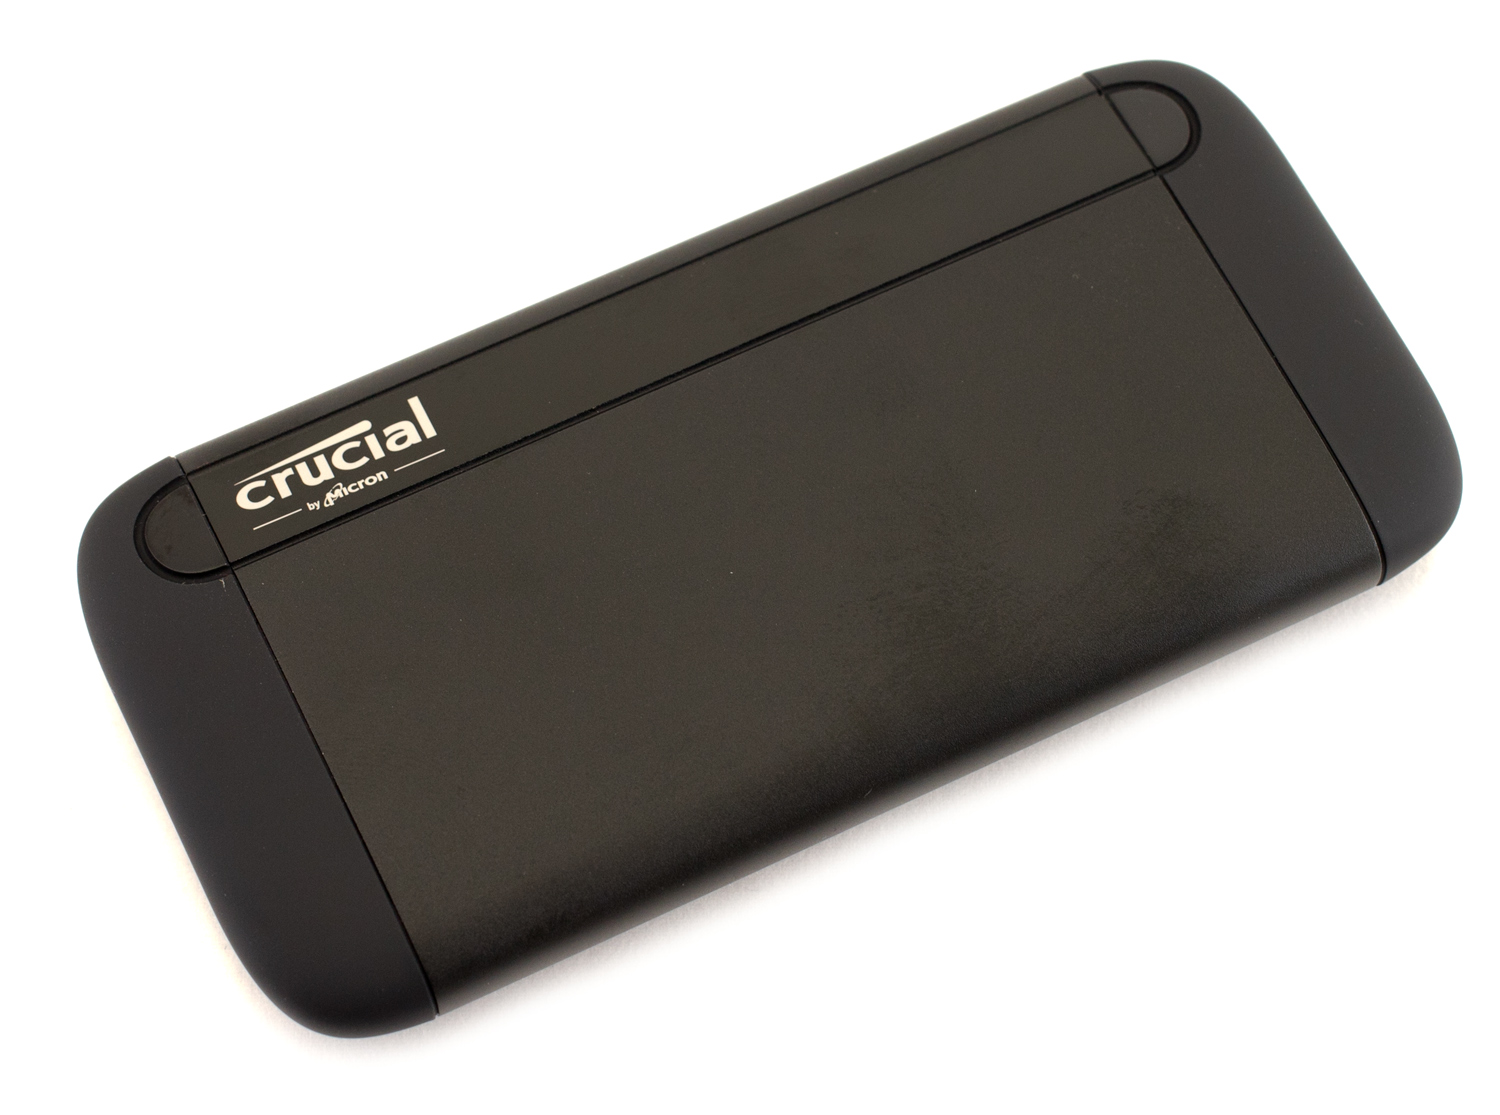 Crucial X8 2TB External SSD Review